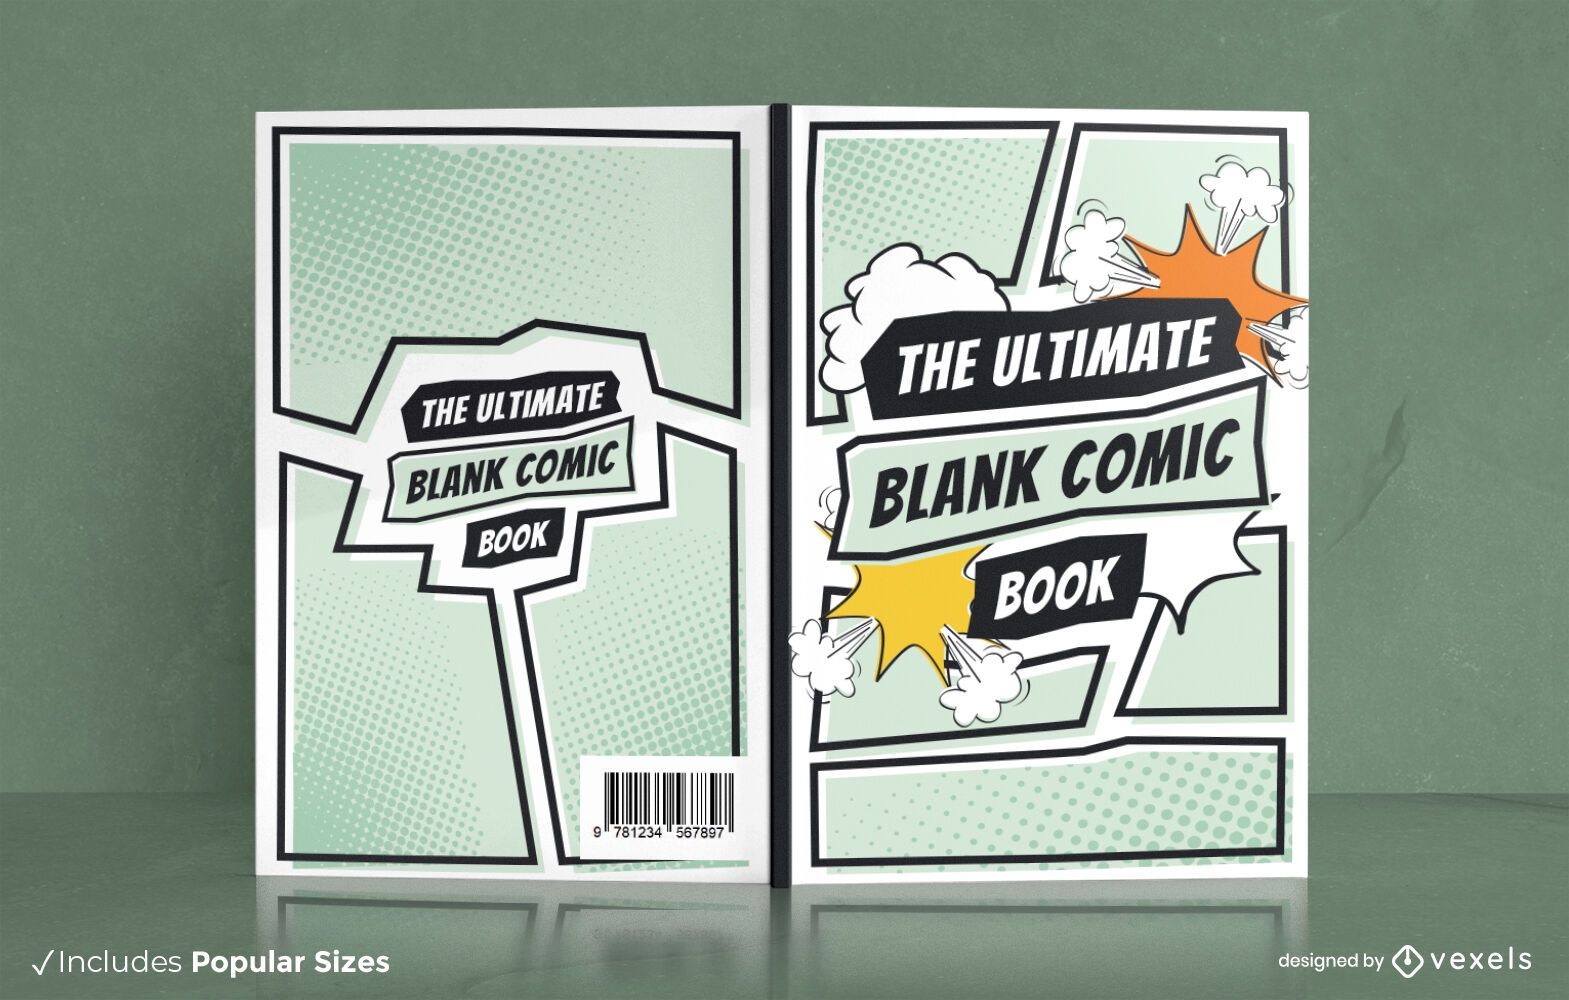 Blank comic magazine book cover design